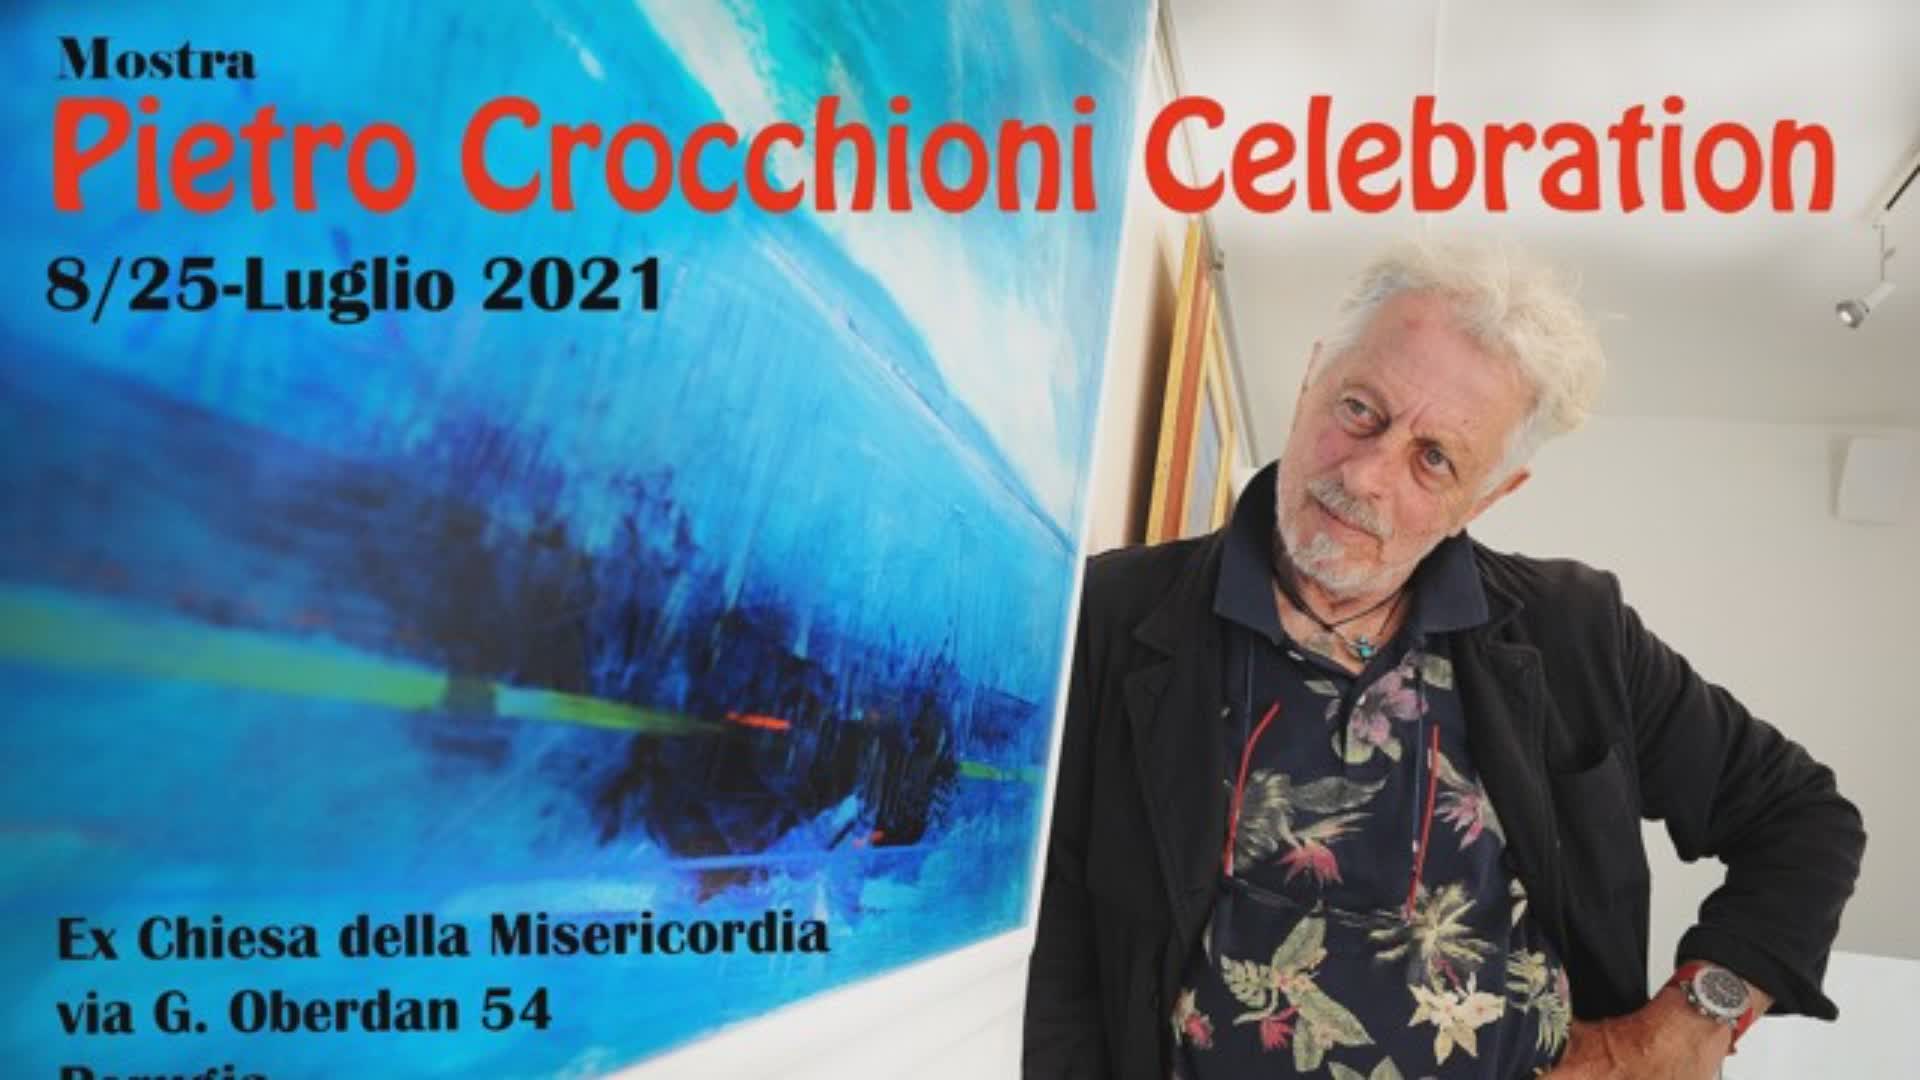 All’ex chiesa Misericordia "Pietro Crocchioni celebration"